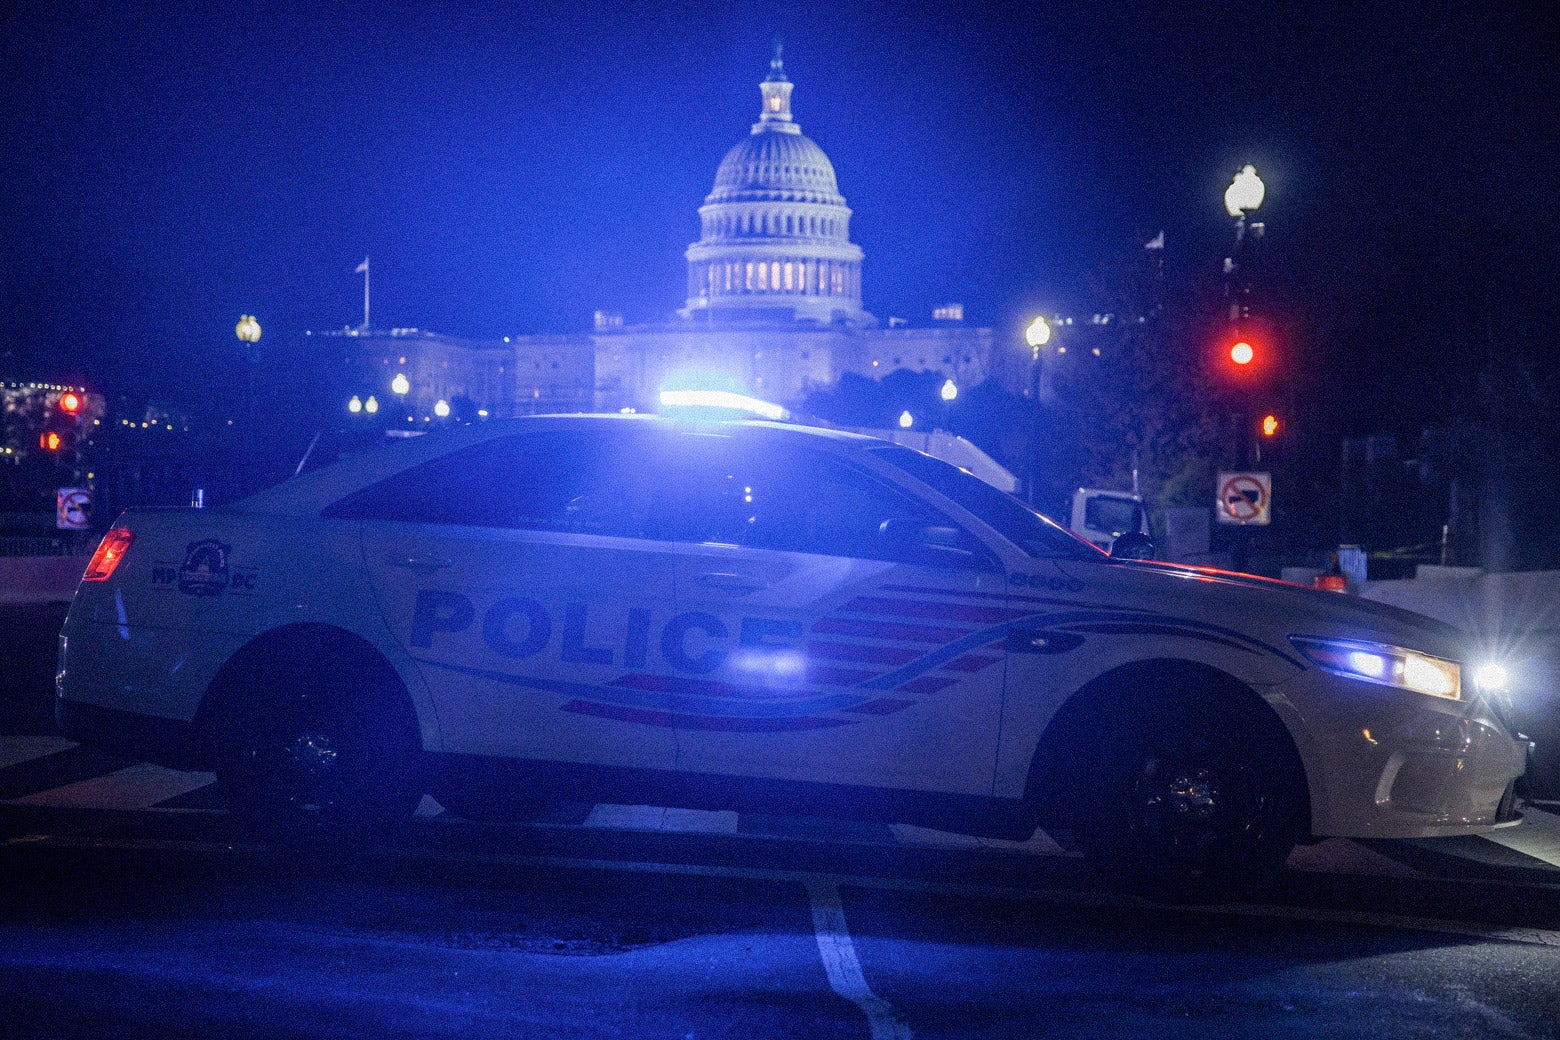 A police car blocks off a street near the U.S. Capitol building